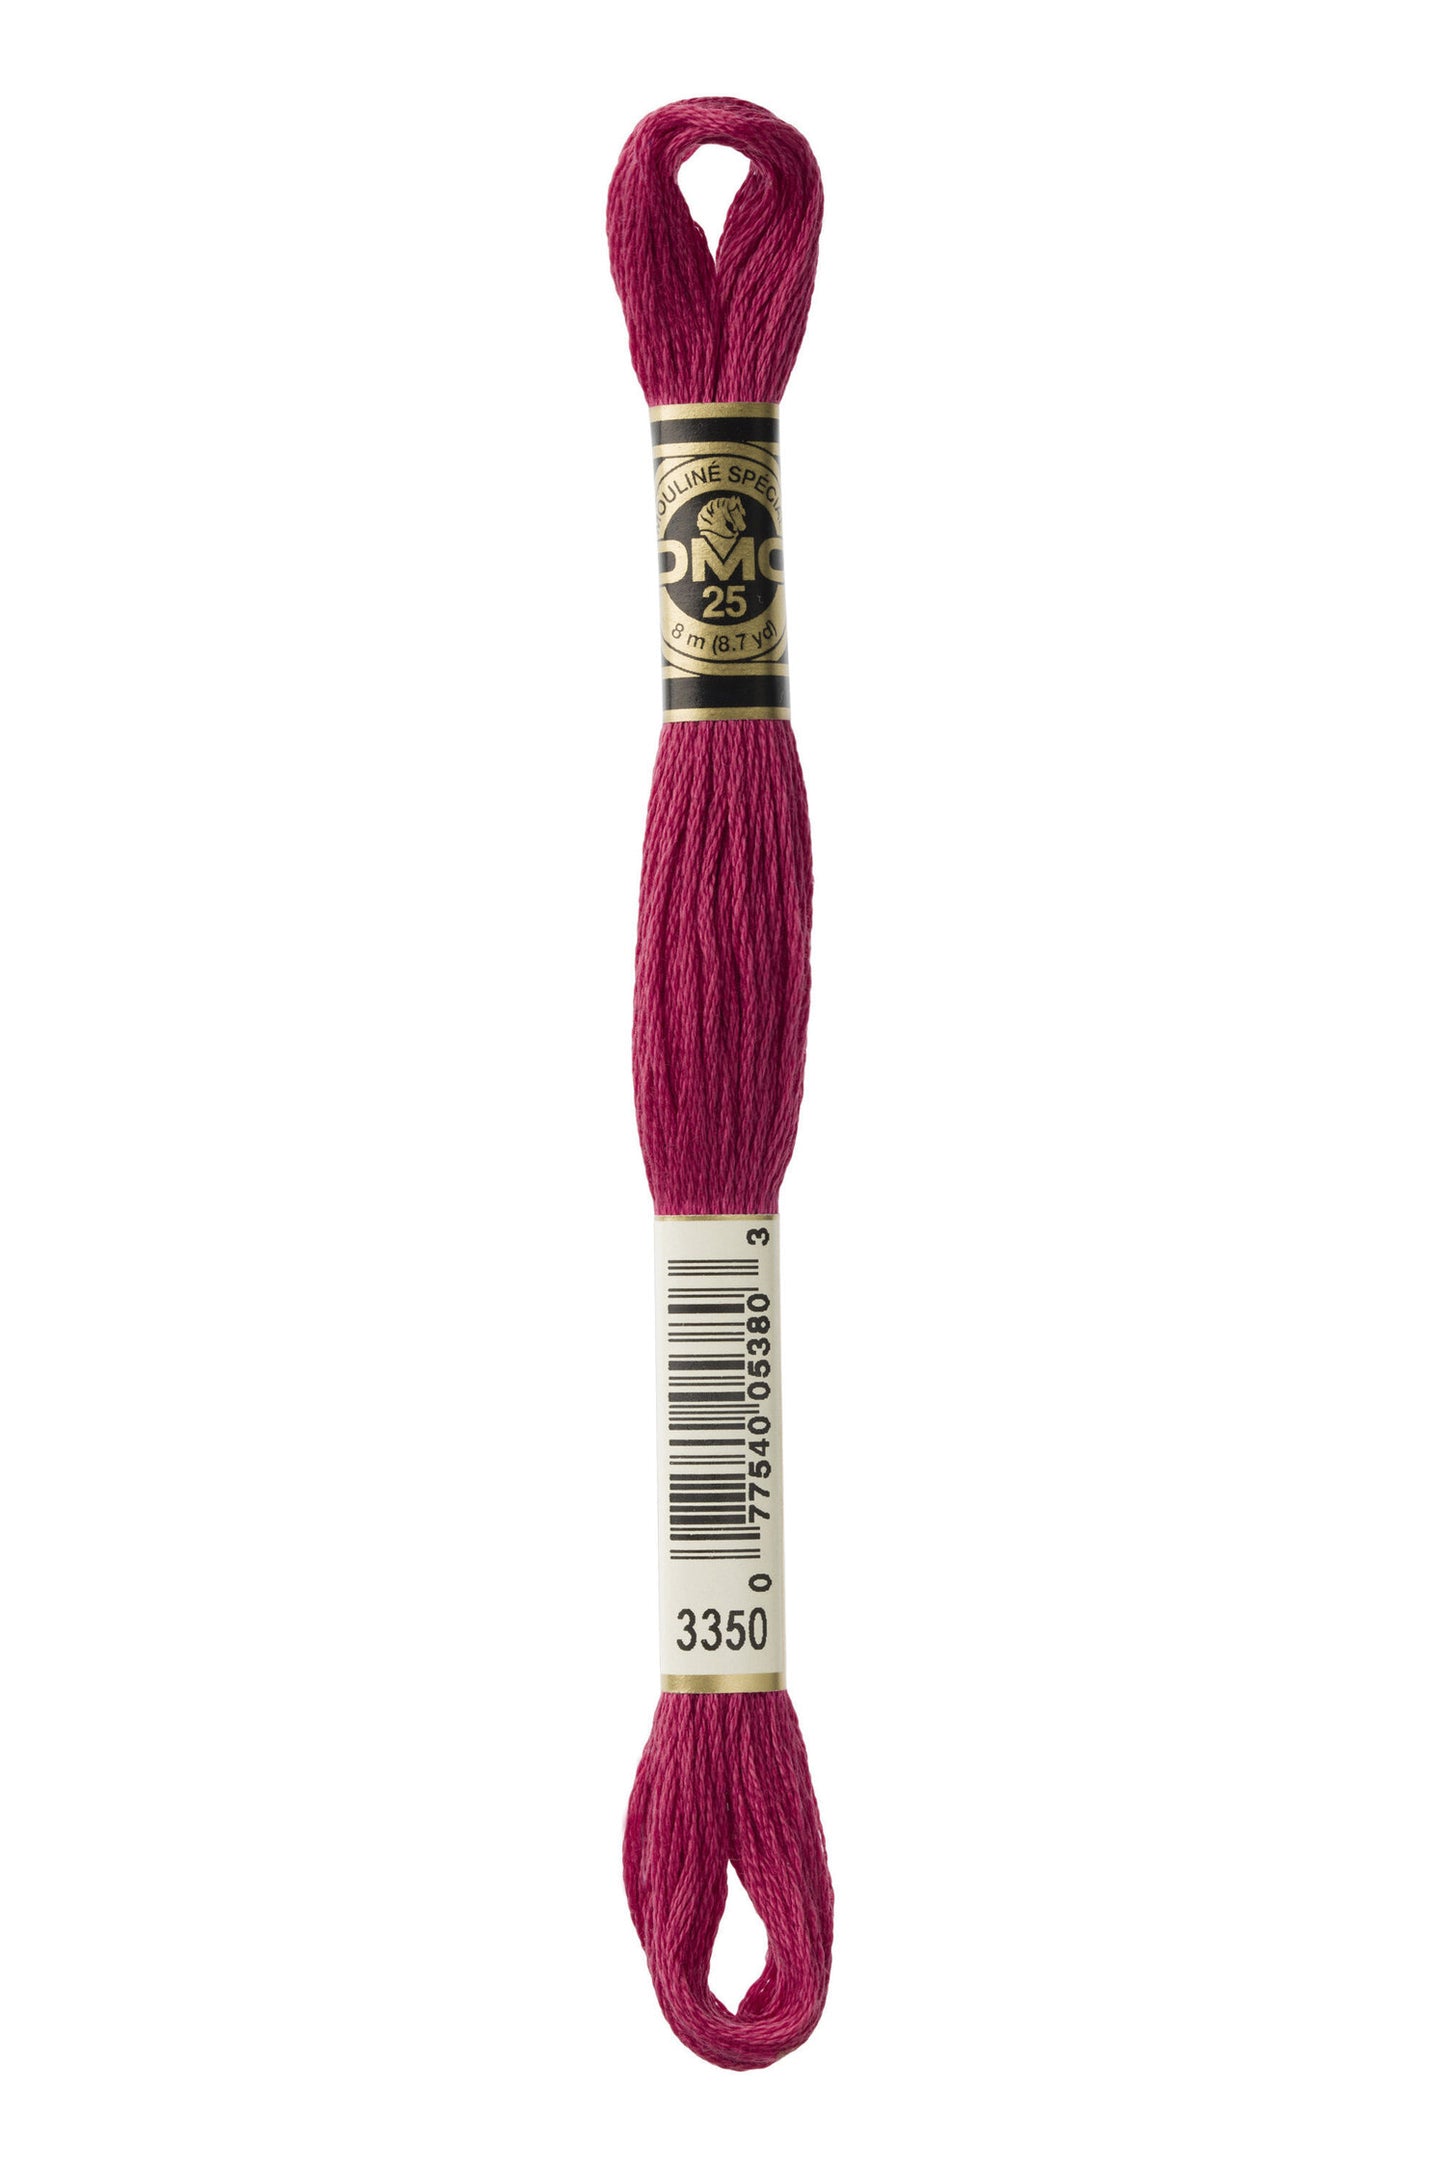 DMC 3350 - Dusty Rose - Ultra Dark - DMC 6 Strand Embroidery Thread, Thread & Floss, Thread & Floss, The Crafty Grimalkin - A Cross Stitch Store